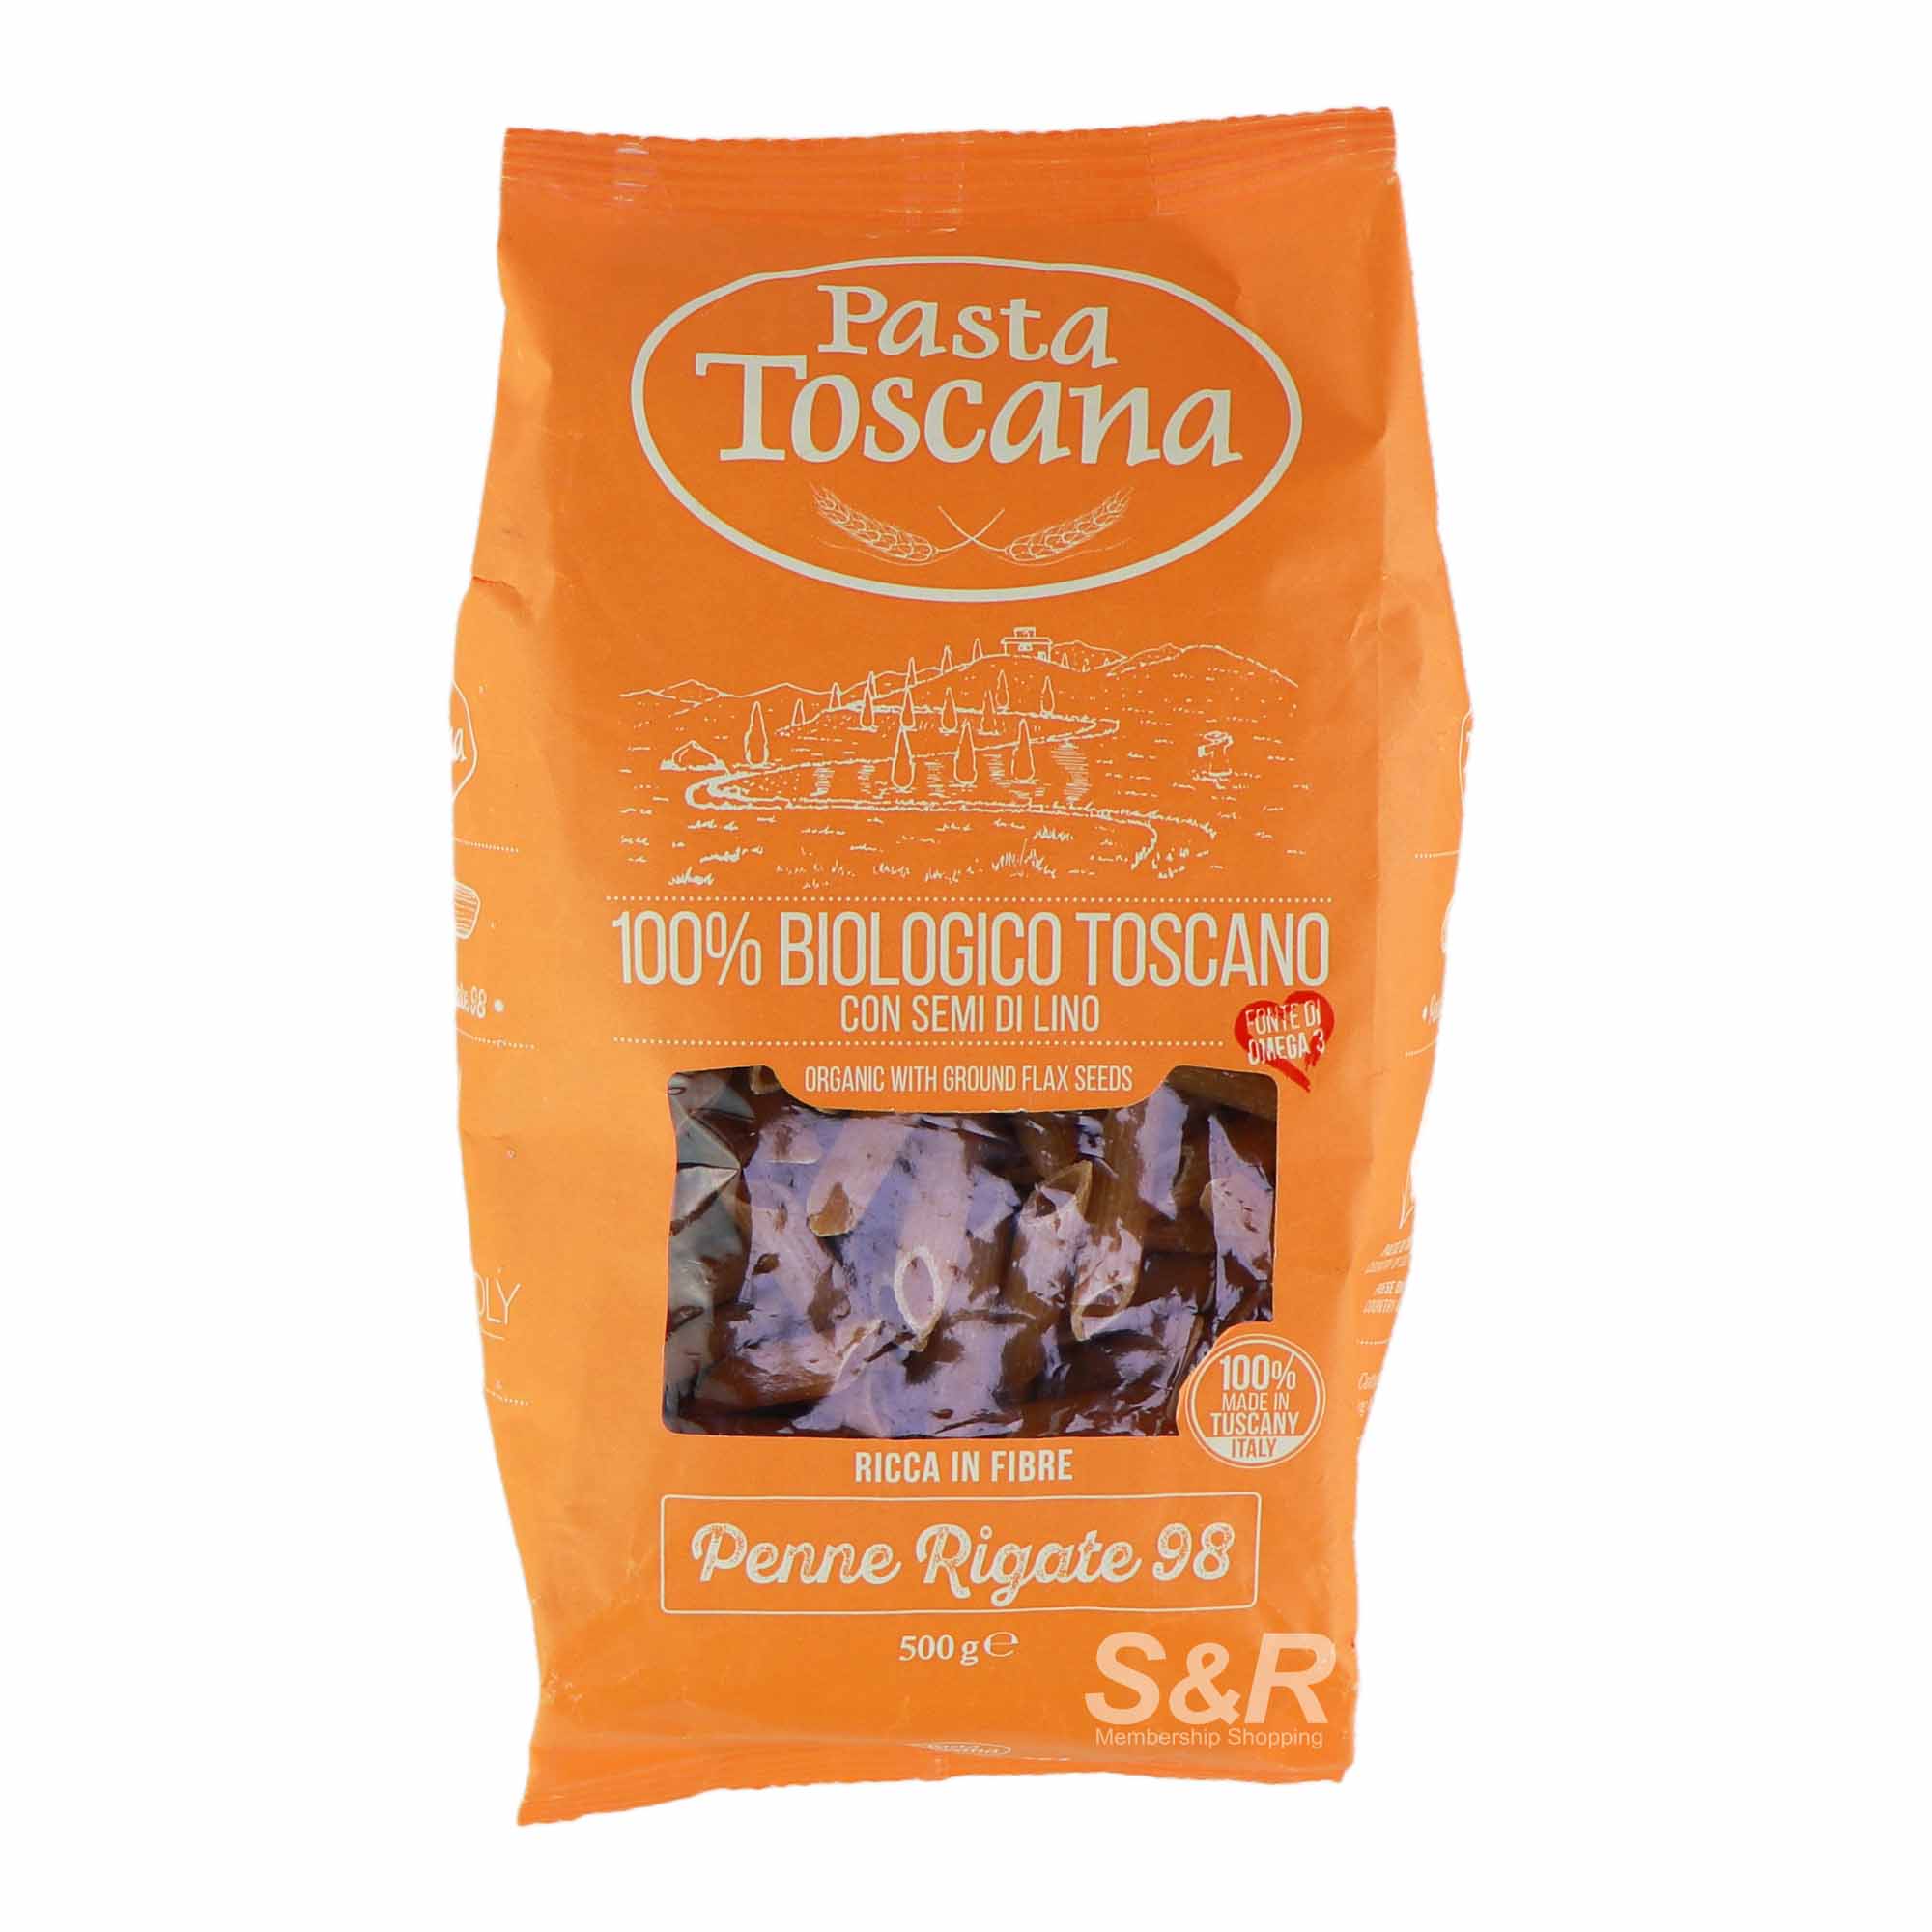 Pasta Toscana Penne Rigate 98 500g